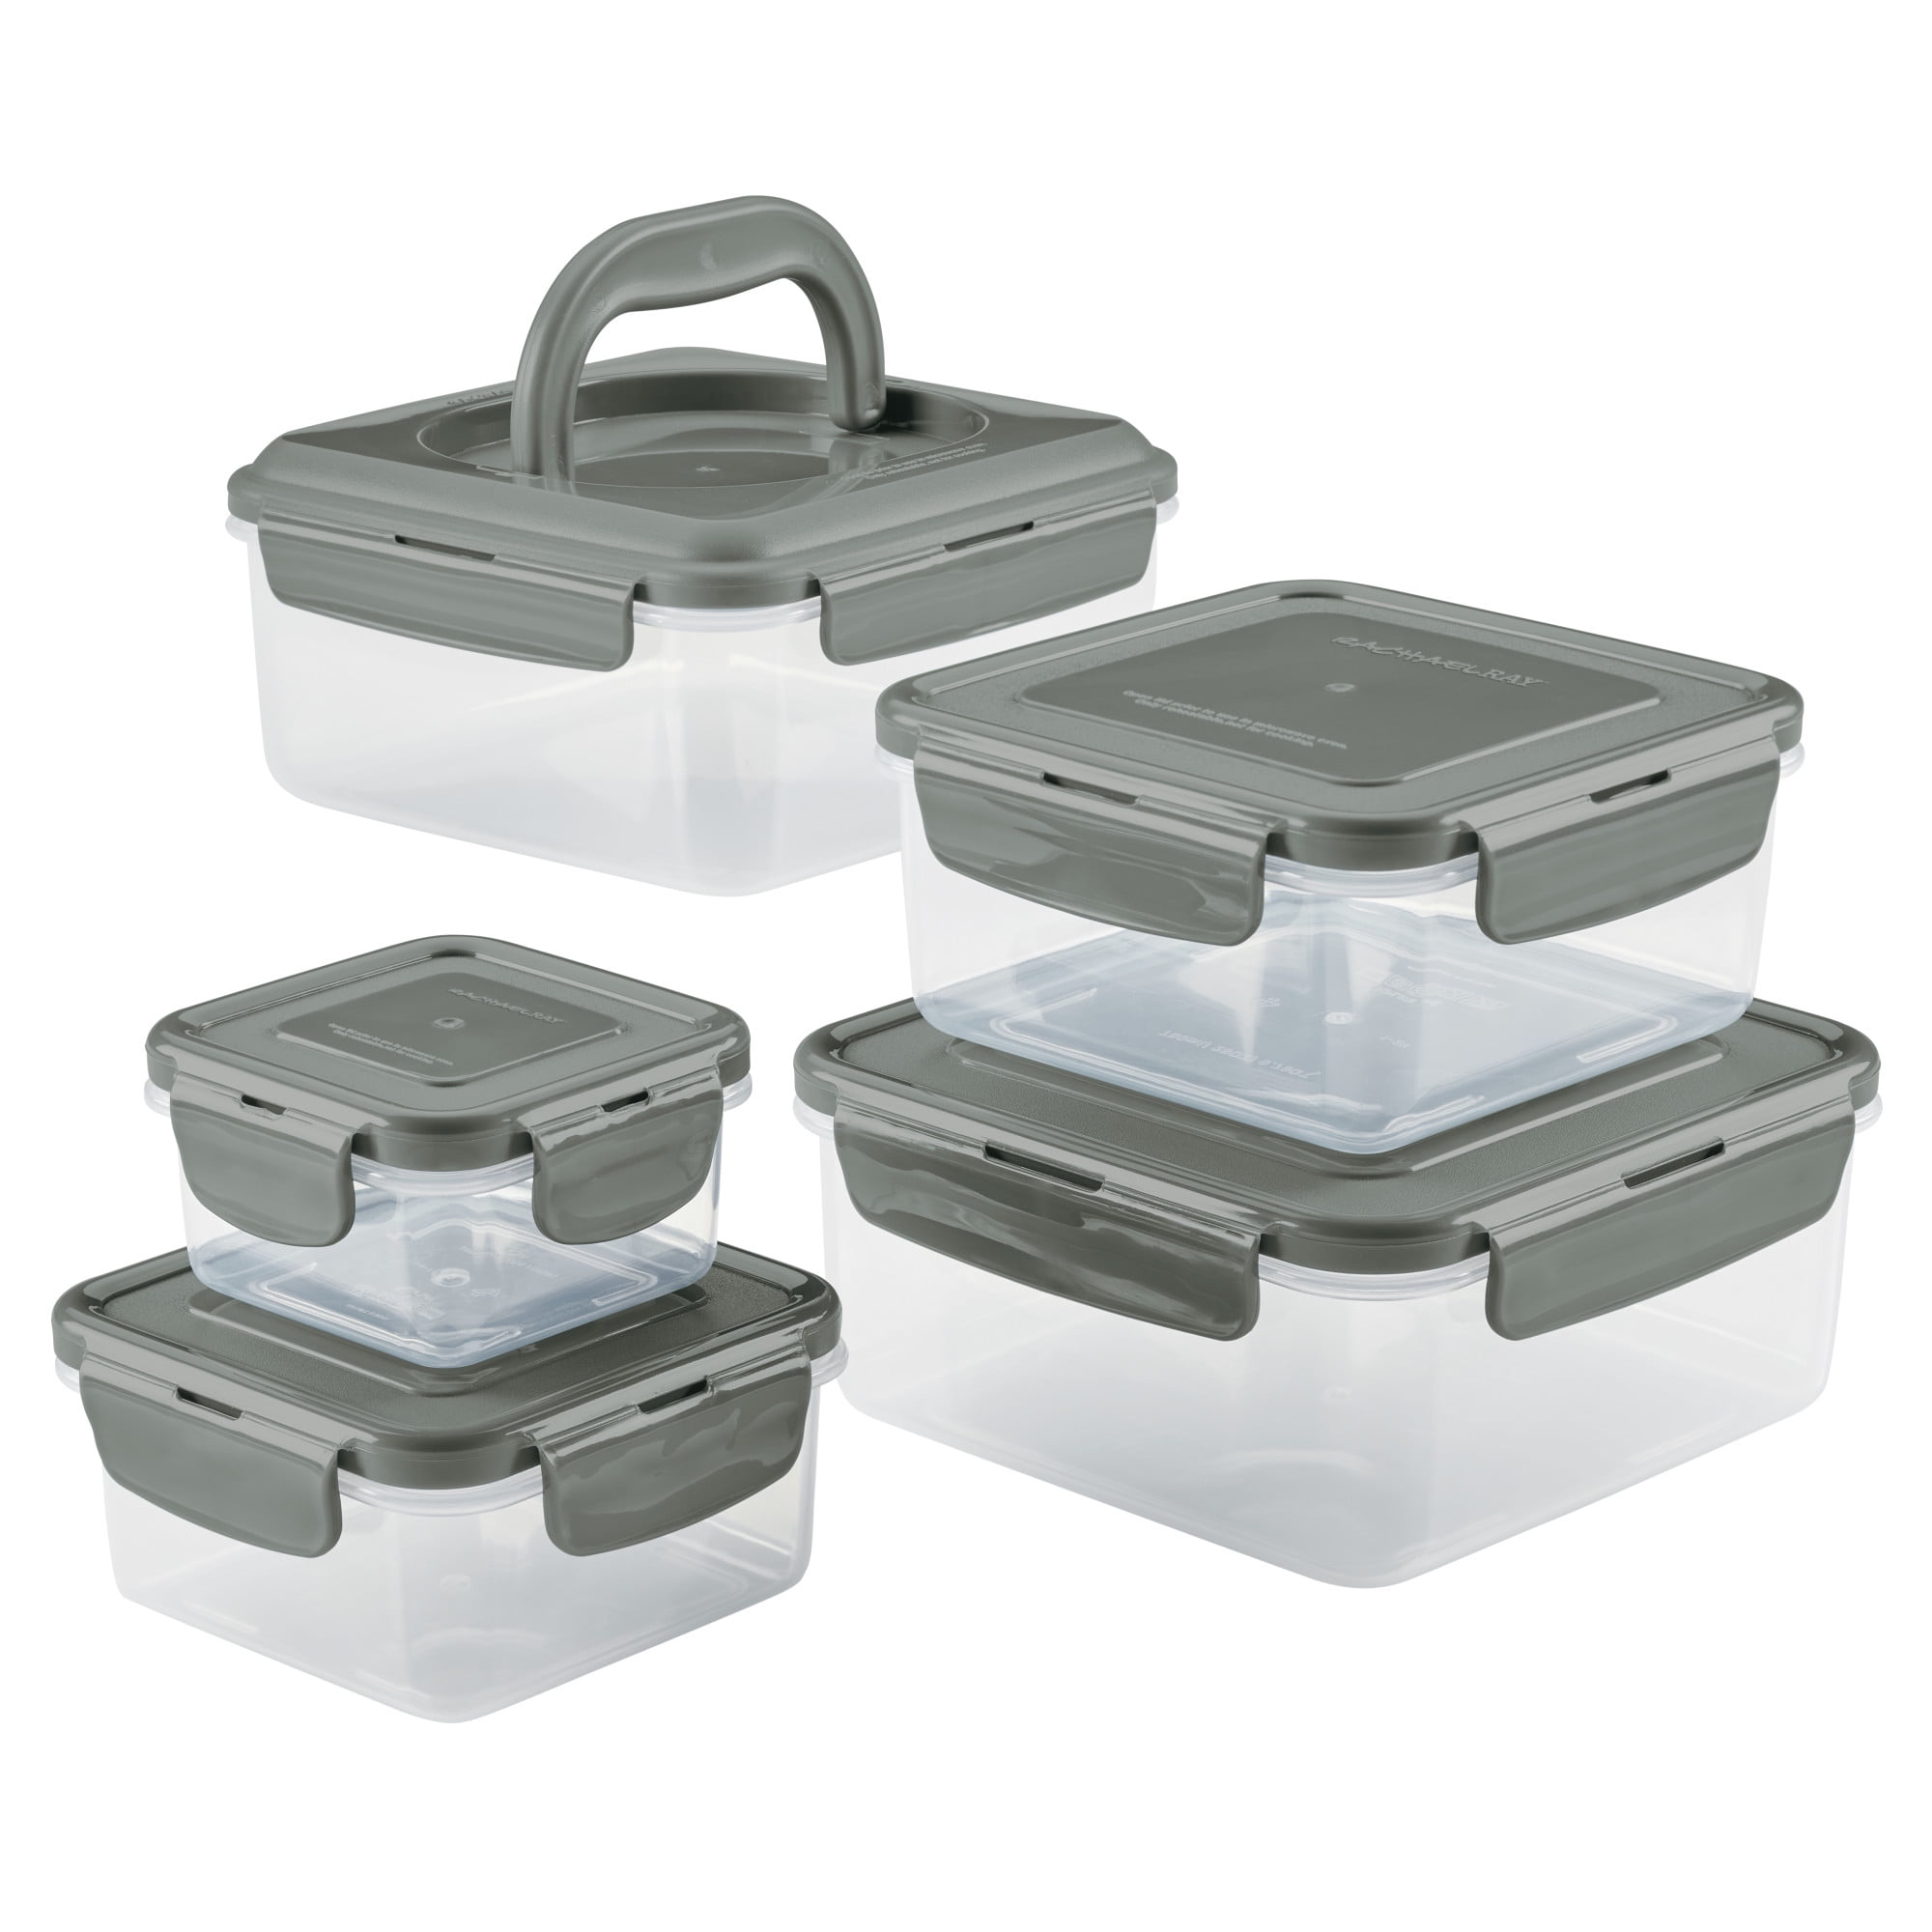 Tough plastic storage box packed with Petromax kitchen set